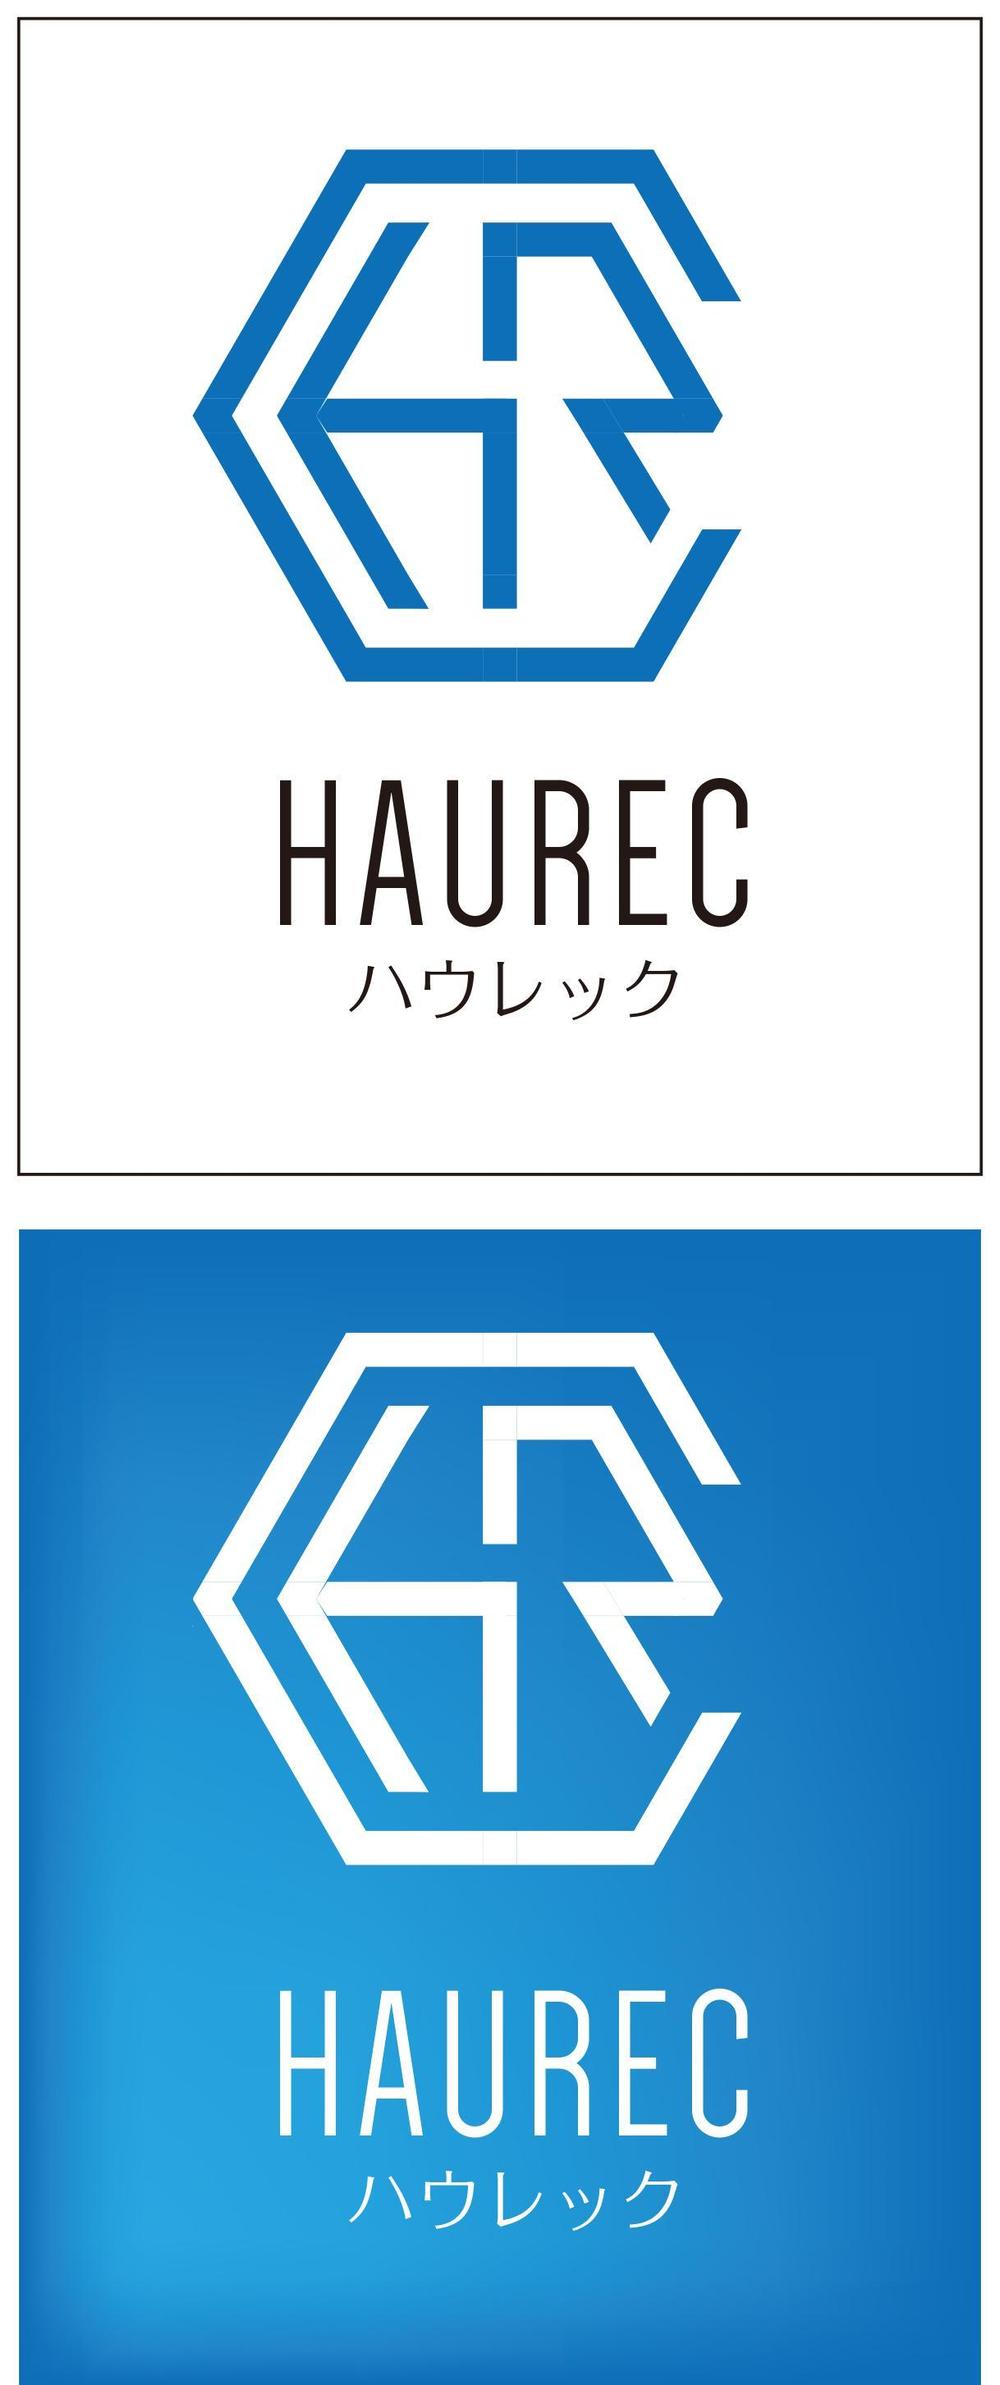 HRC(HAUREC)ハウレック-001 2.jpg